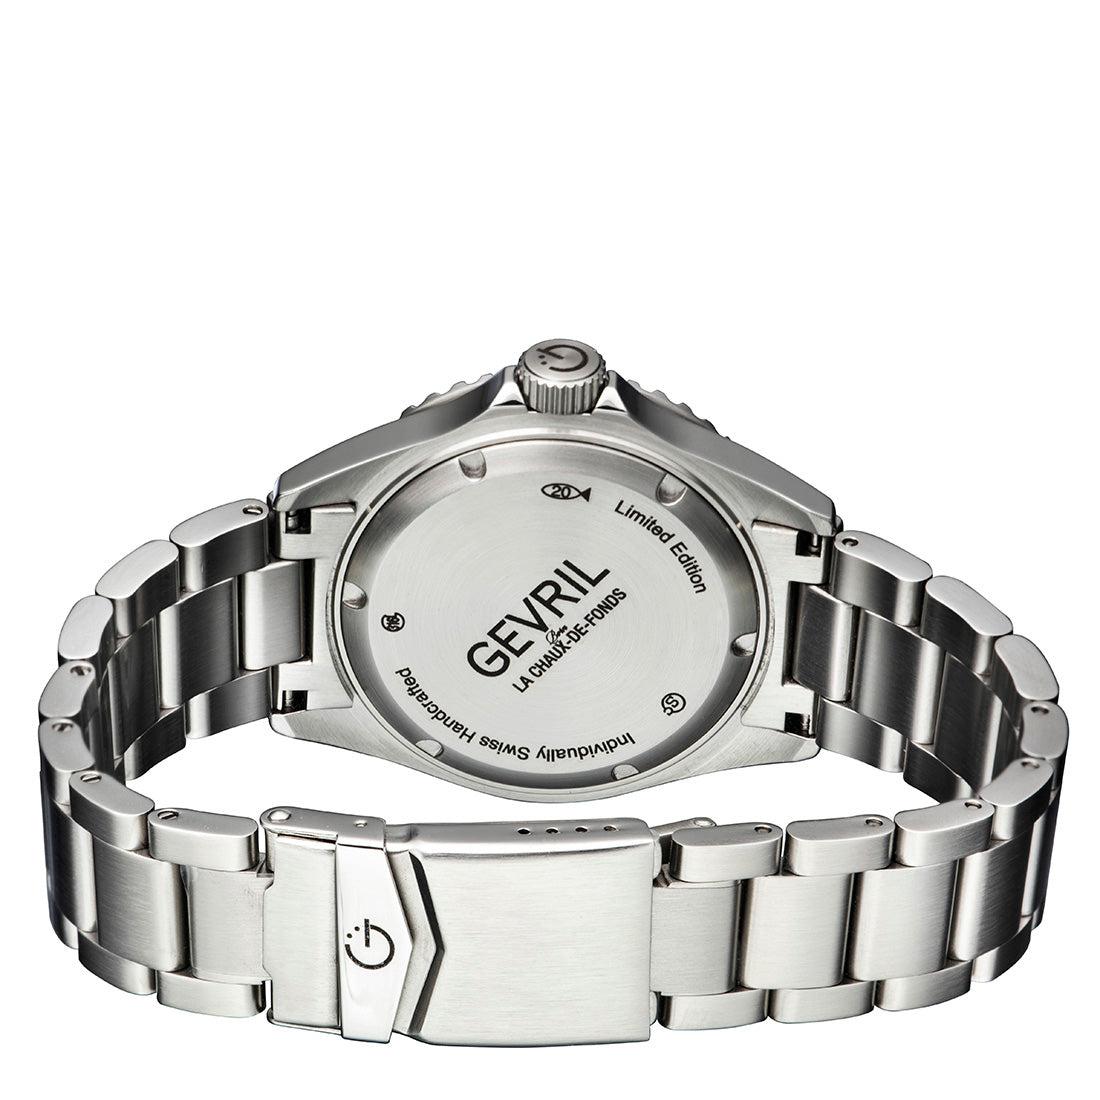 Gevril-Luxury-Swiss-Watches-Gevril Wall Street - Ceramic Bezel-4953A